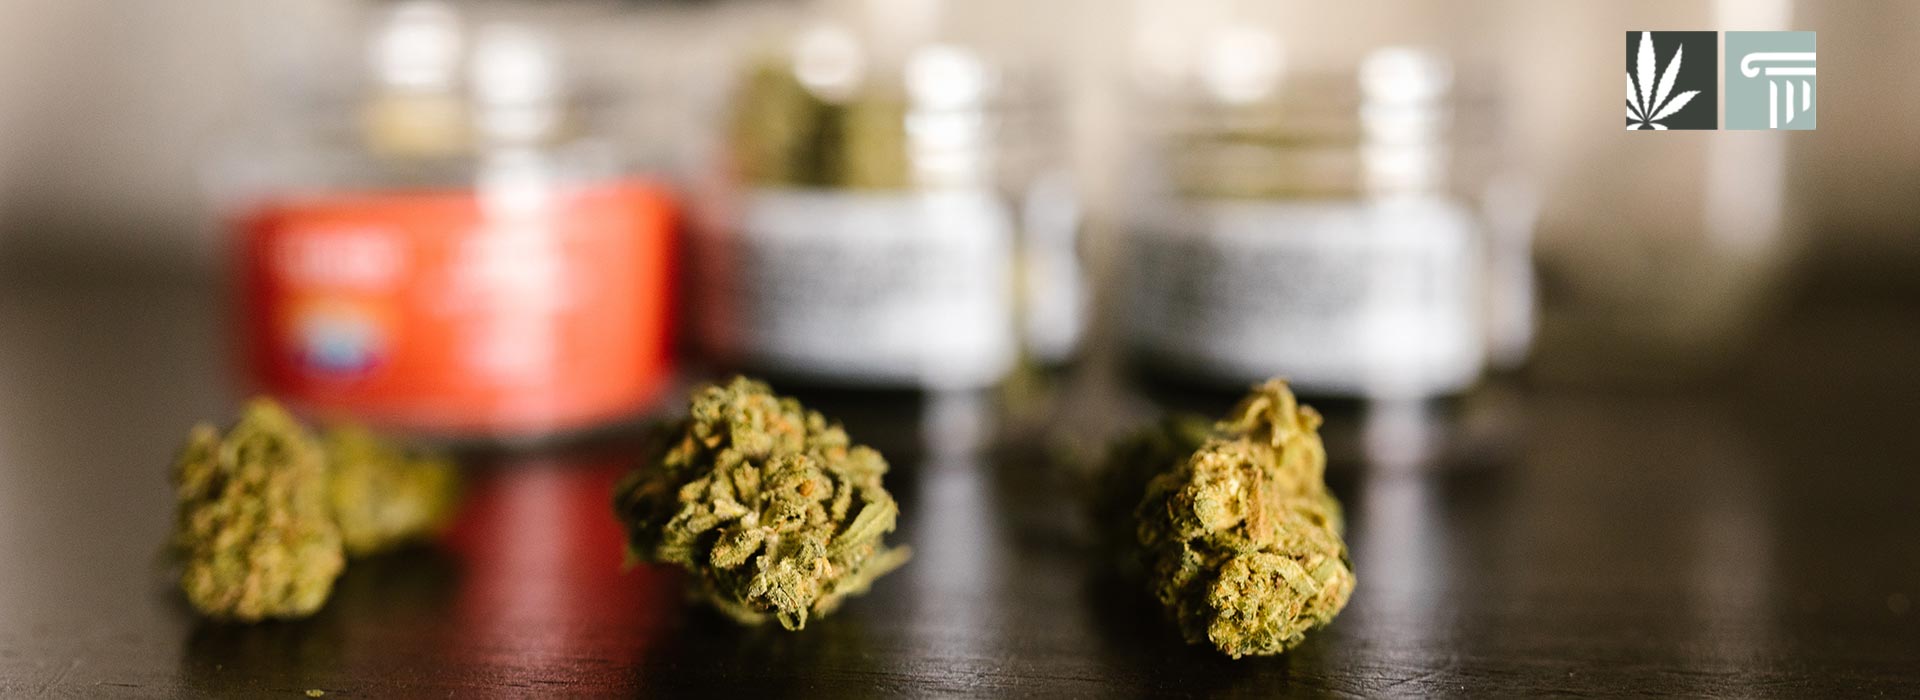 connecticut patients grow medical marijuana at home